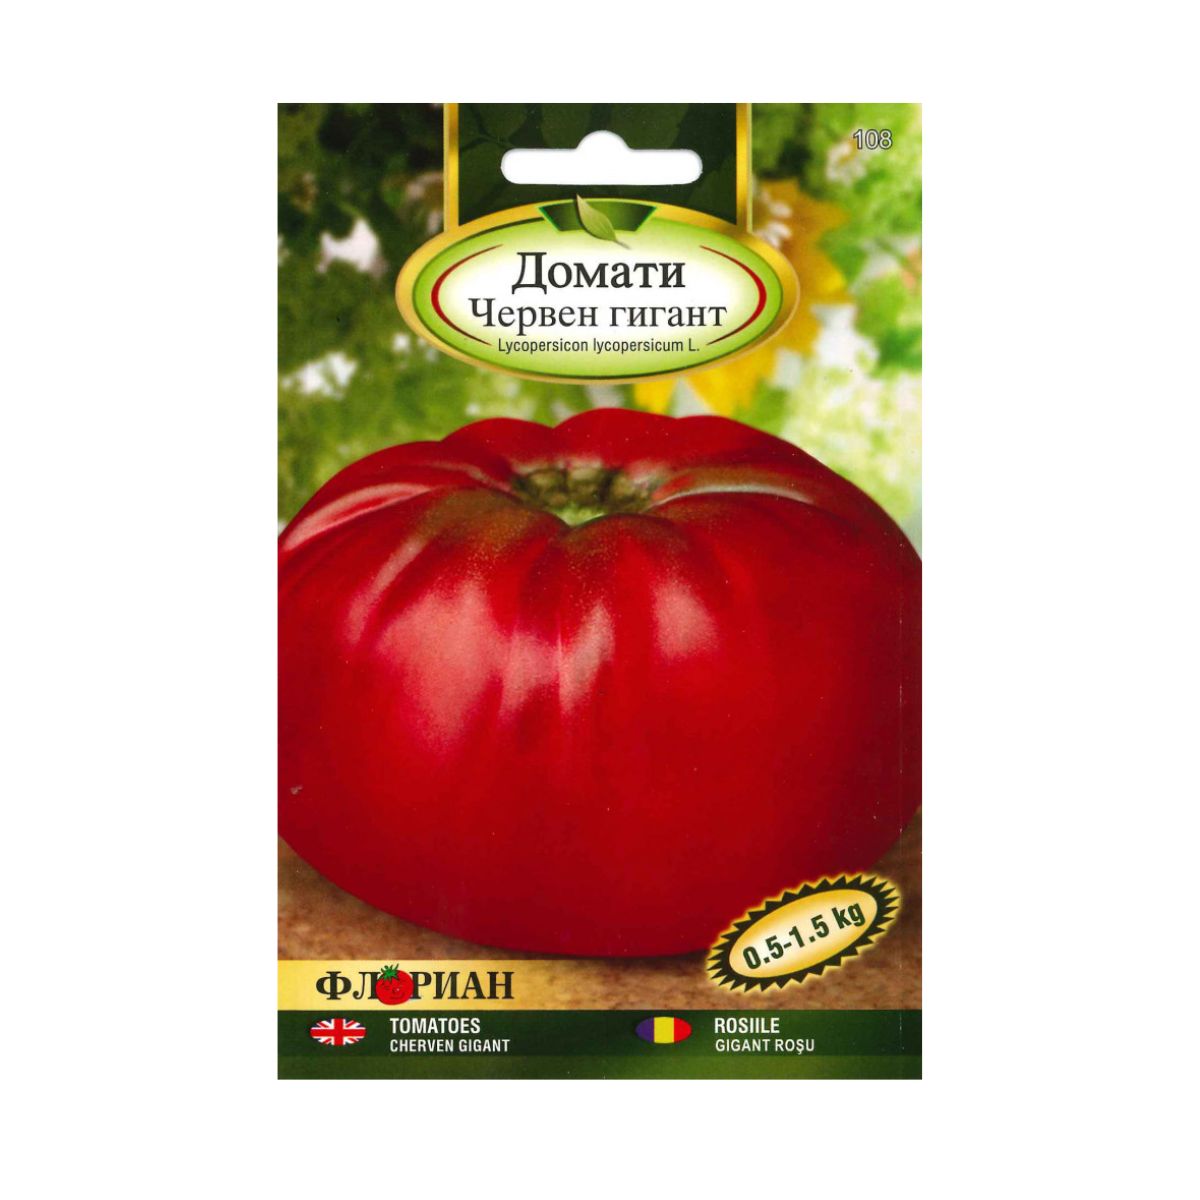 Tomate - Seminte de tomate Gigant Rosu, 0.3 grame FLORIAN, hectarul.ro